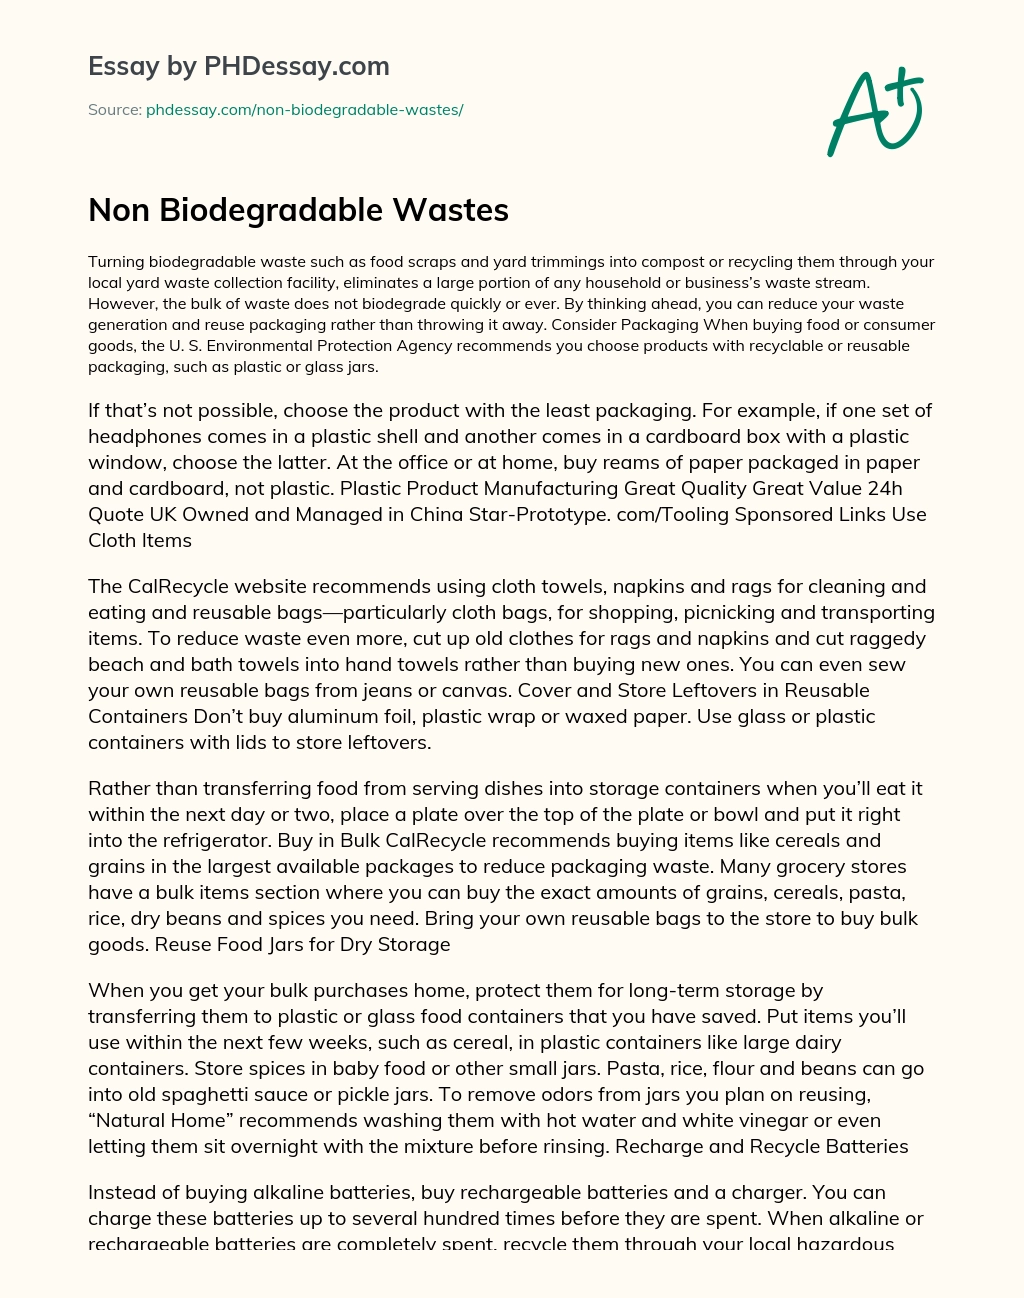 Non Biodegradable Wastes essay